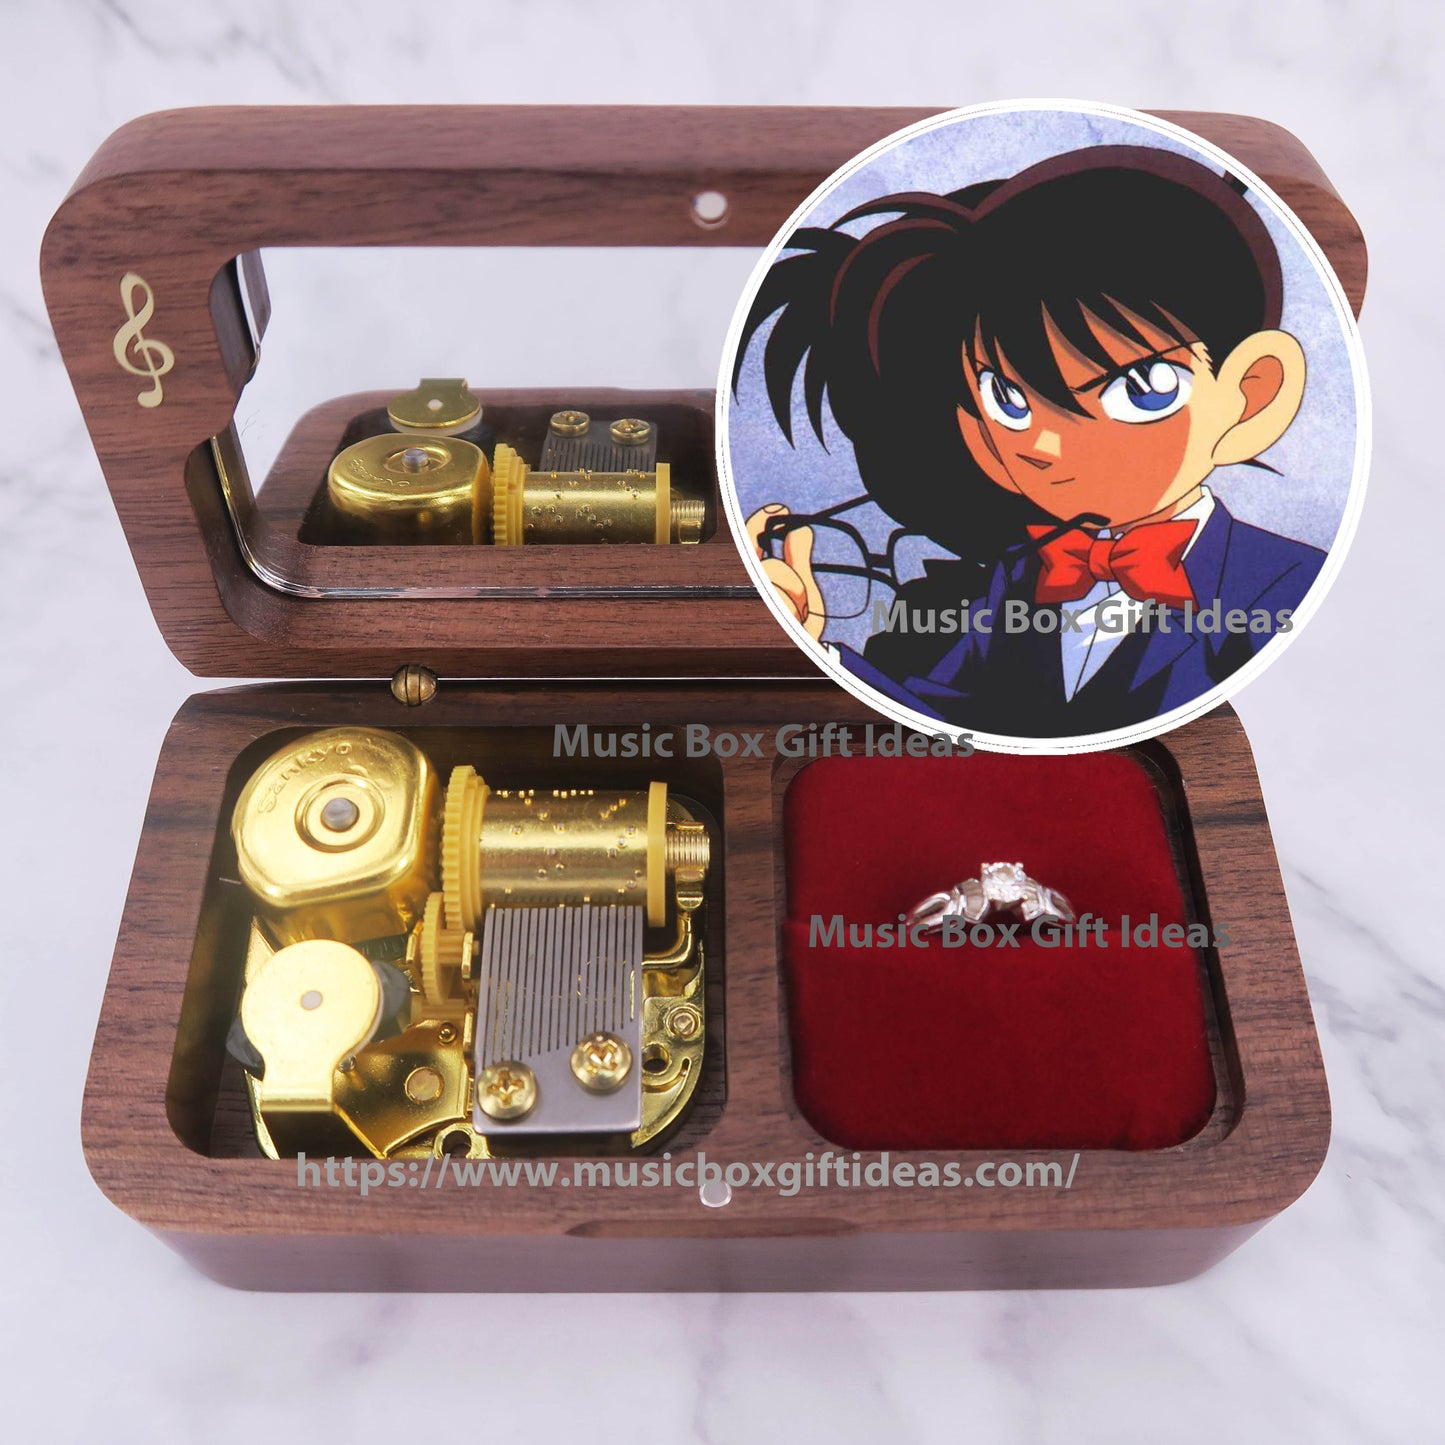 Case Closed Detective Conan Main Theme Soundtrack 18-Note Jewelry Music Box Gift (Wooden Clockwork) - Music Box Gift Ideas